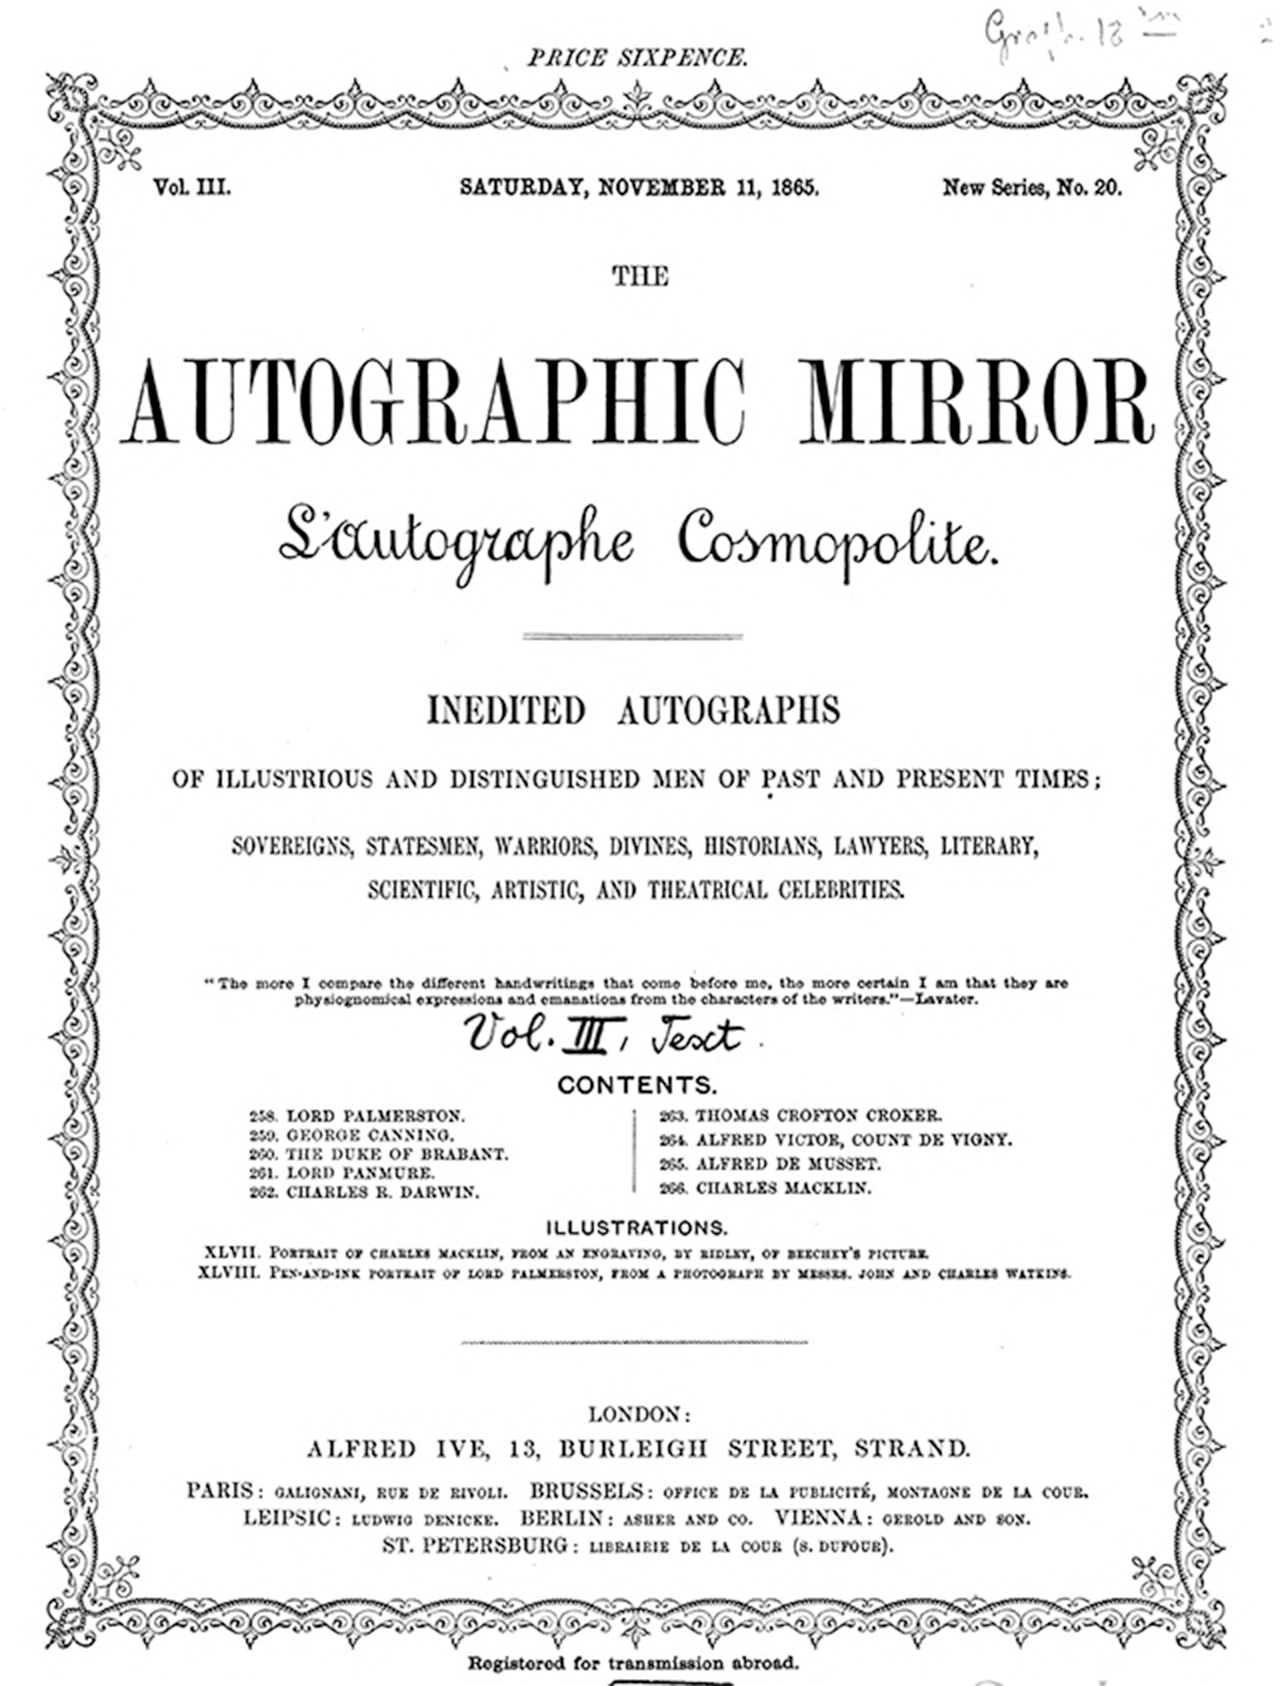 The Autographic Mirror